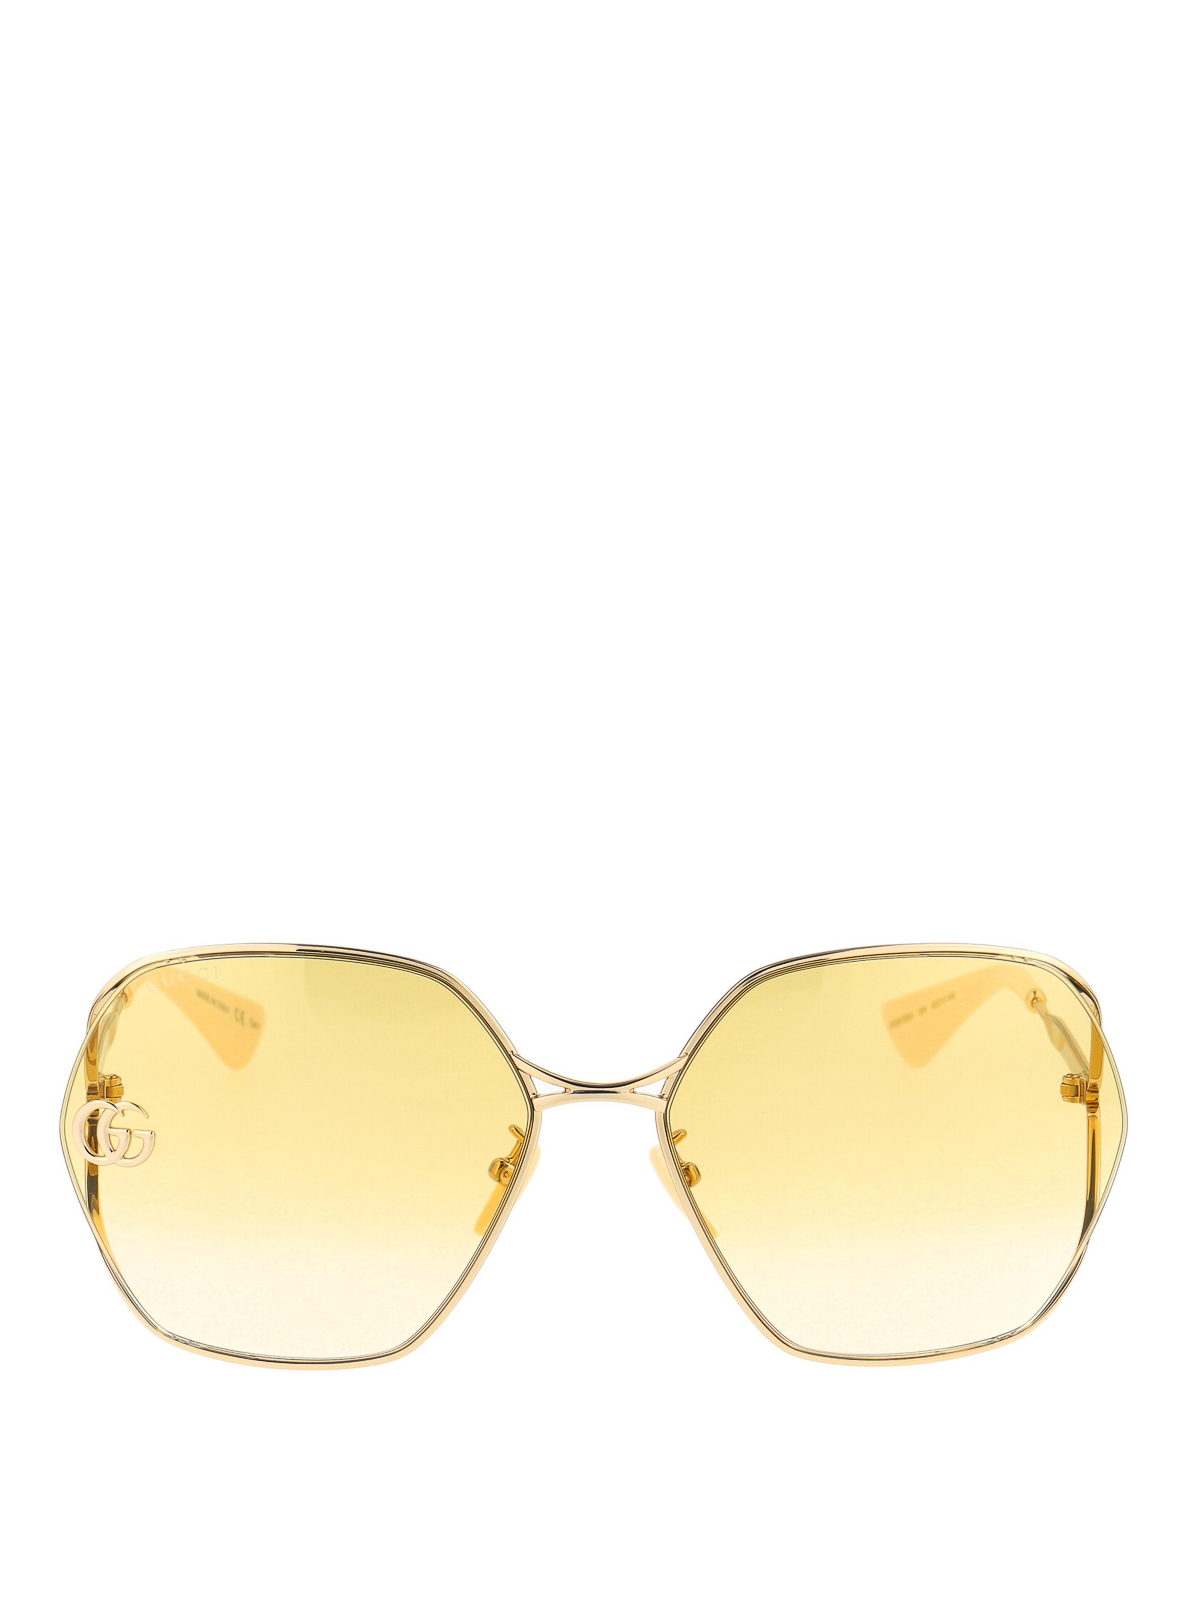 gucci glasses yellow